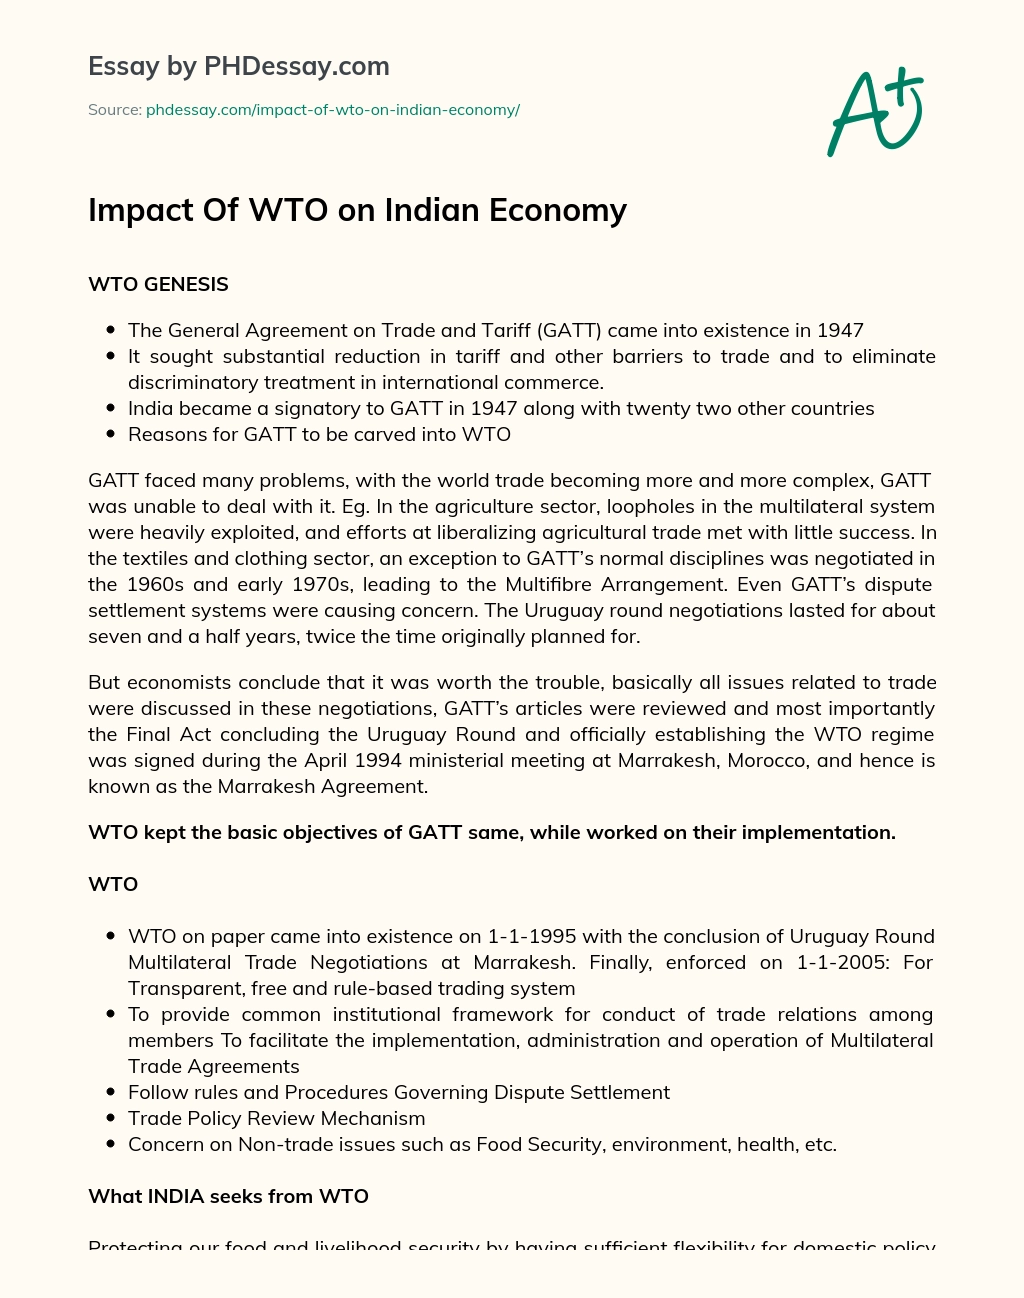 Impact Of WTO on Indian Economy essay